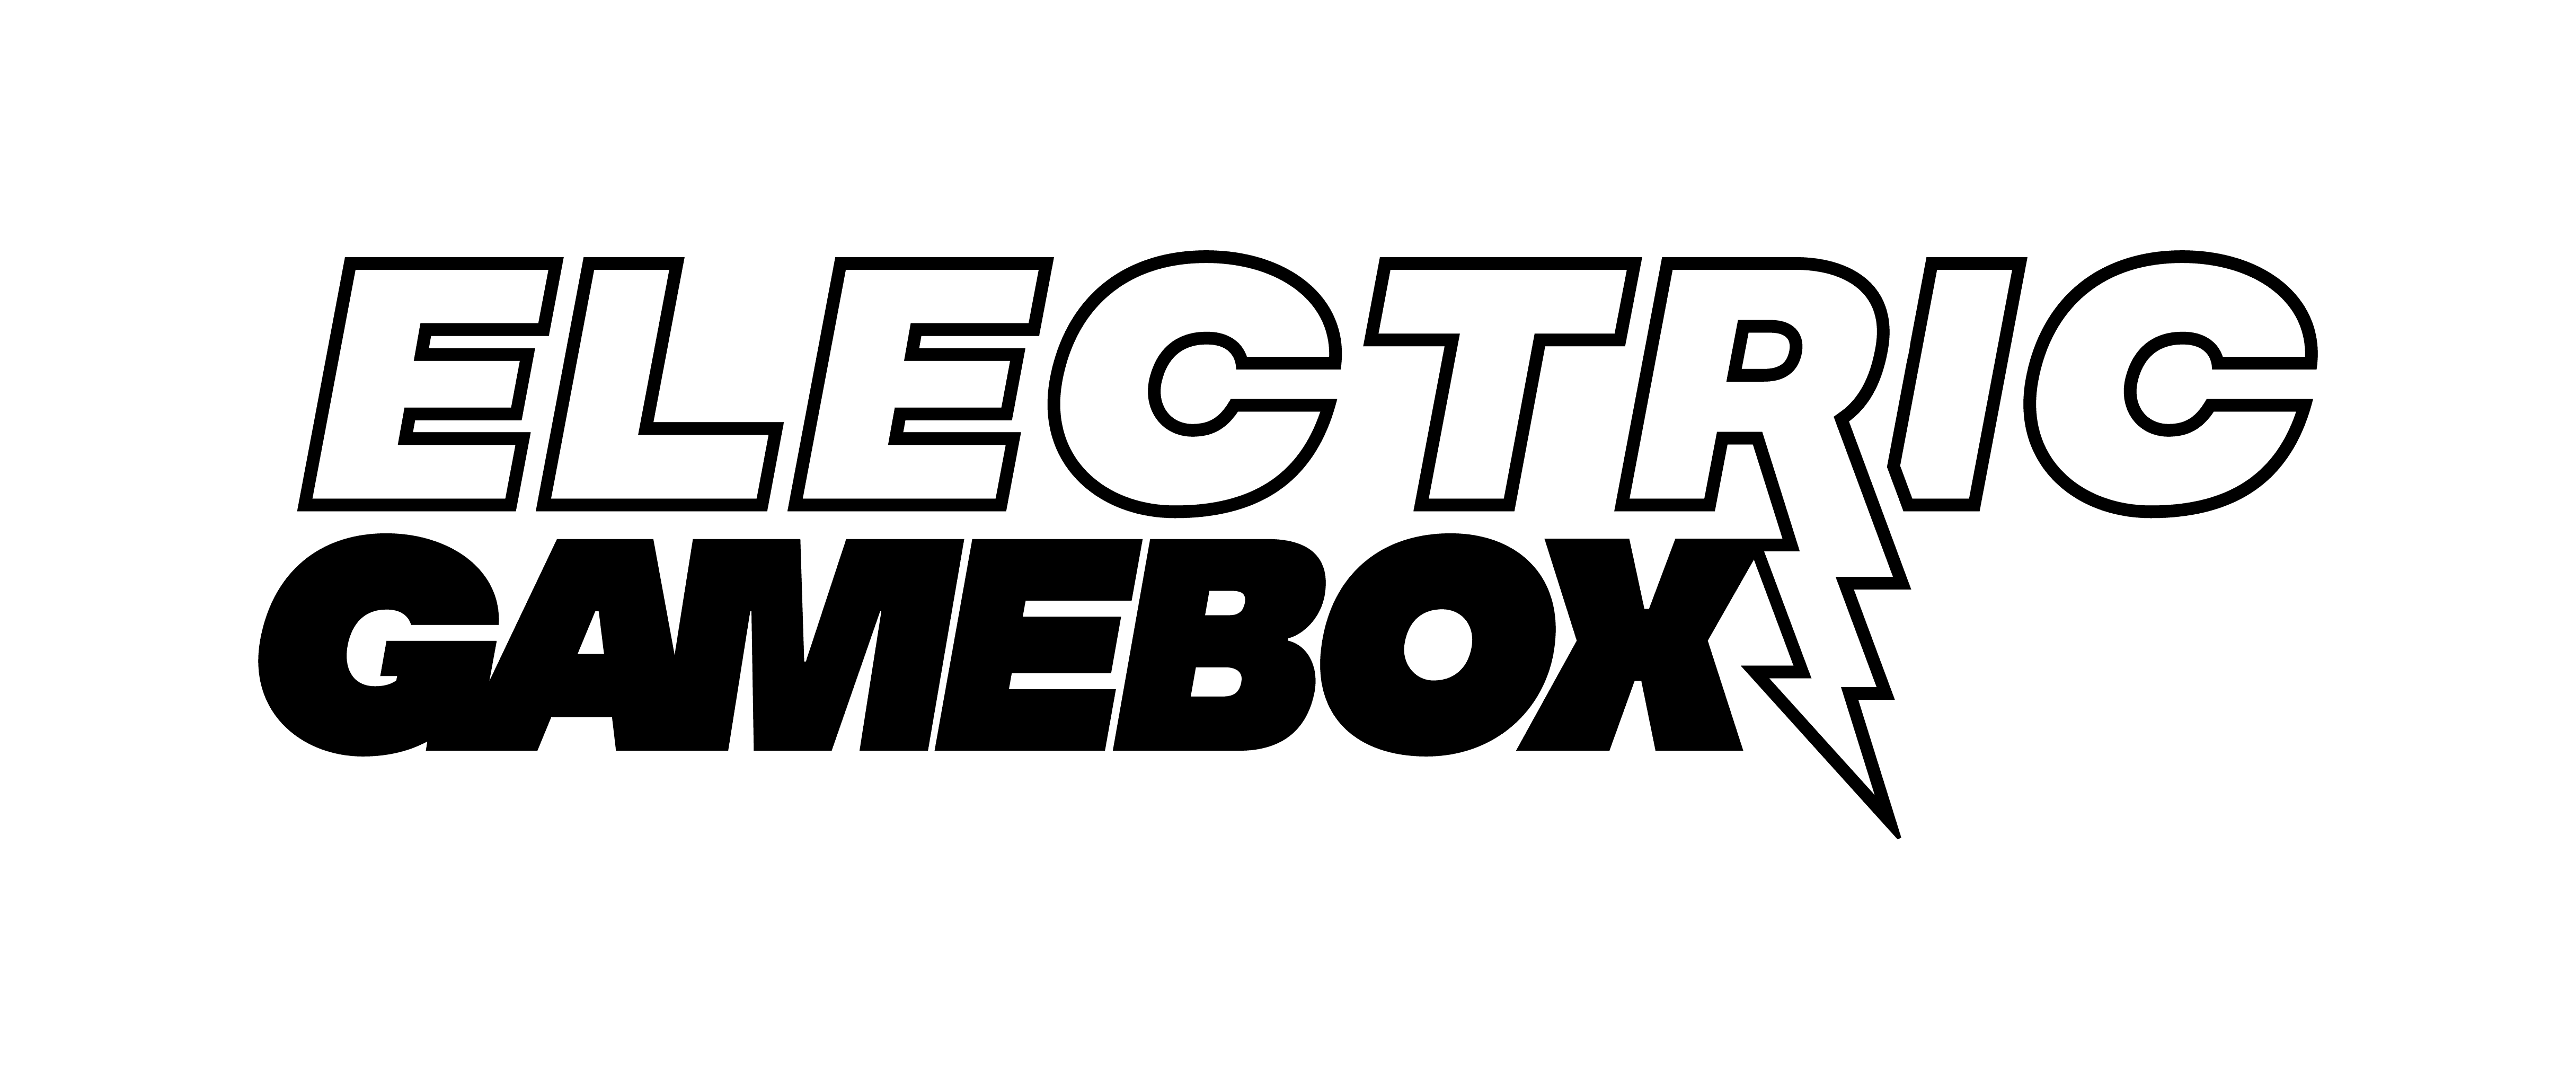 Electric Gamebox